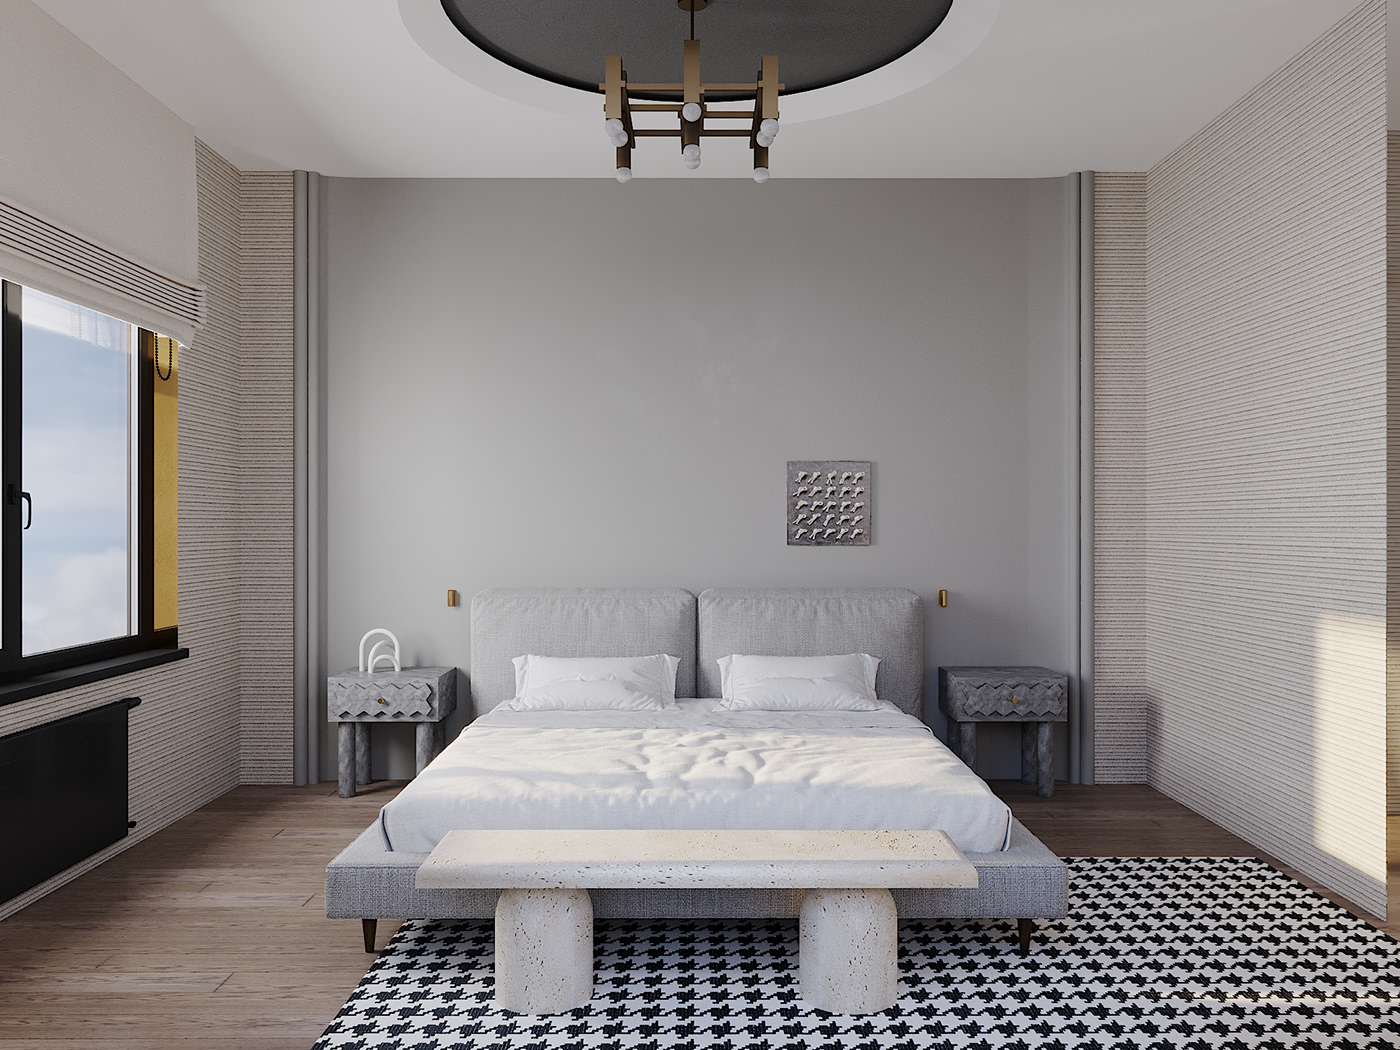 3D 3dsmax corona render  interior design  interiordesign Render visualization